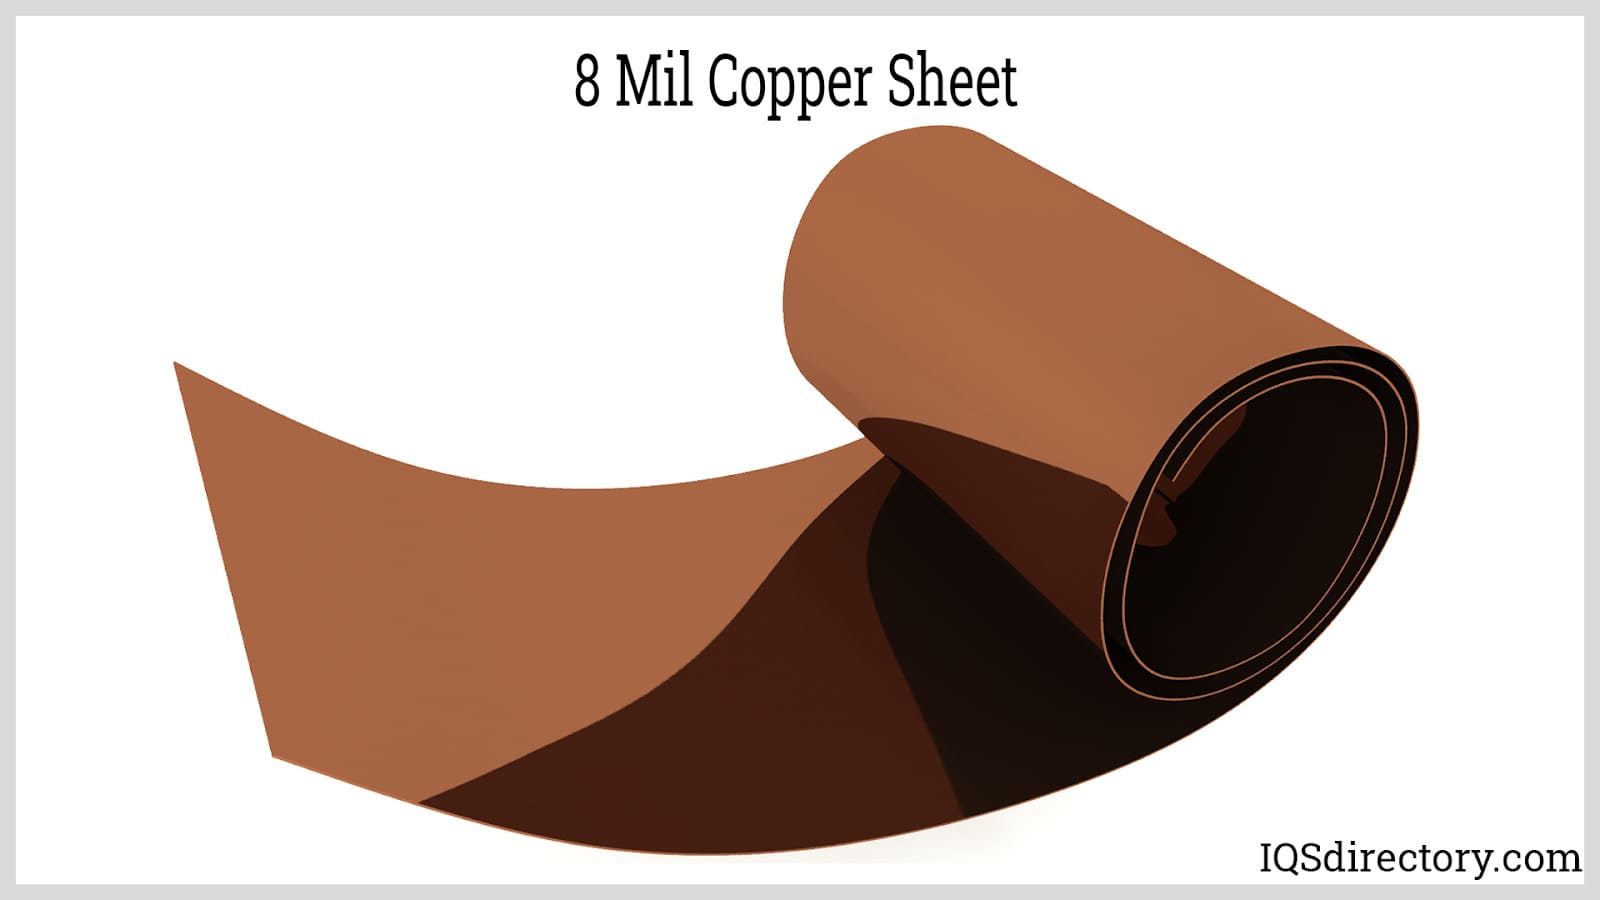 K&S Precision Metals 6532 Copper Sheet 0.016 Thickness x 8 Width x 10 Length 26 Gauge 1 PCS PER Car Made in USA Copper Coating Cut Cutting Angle Flute 